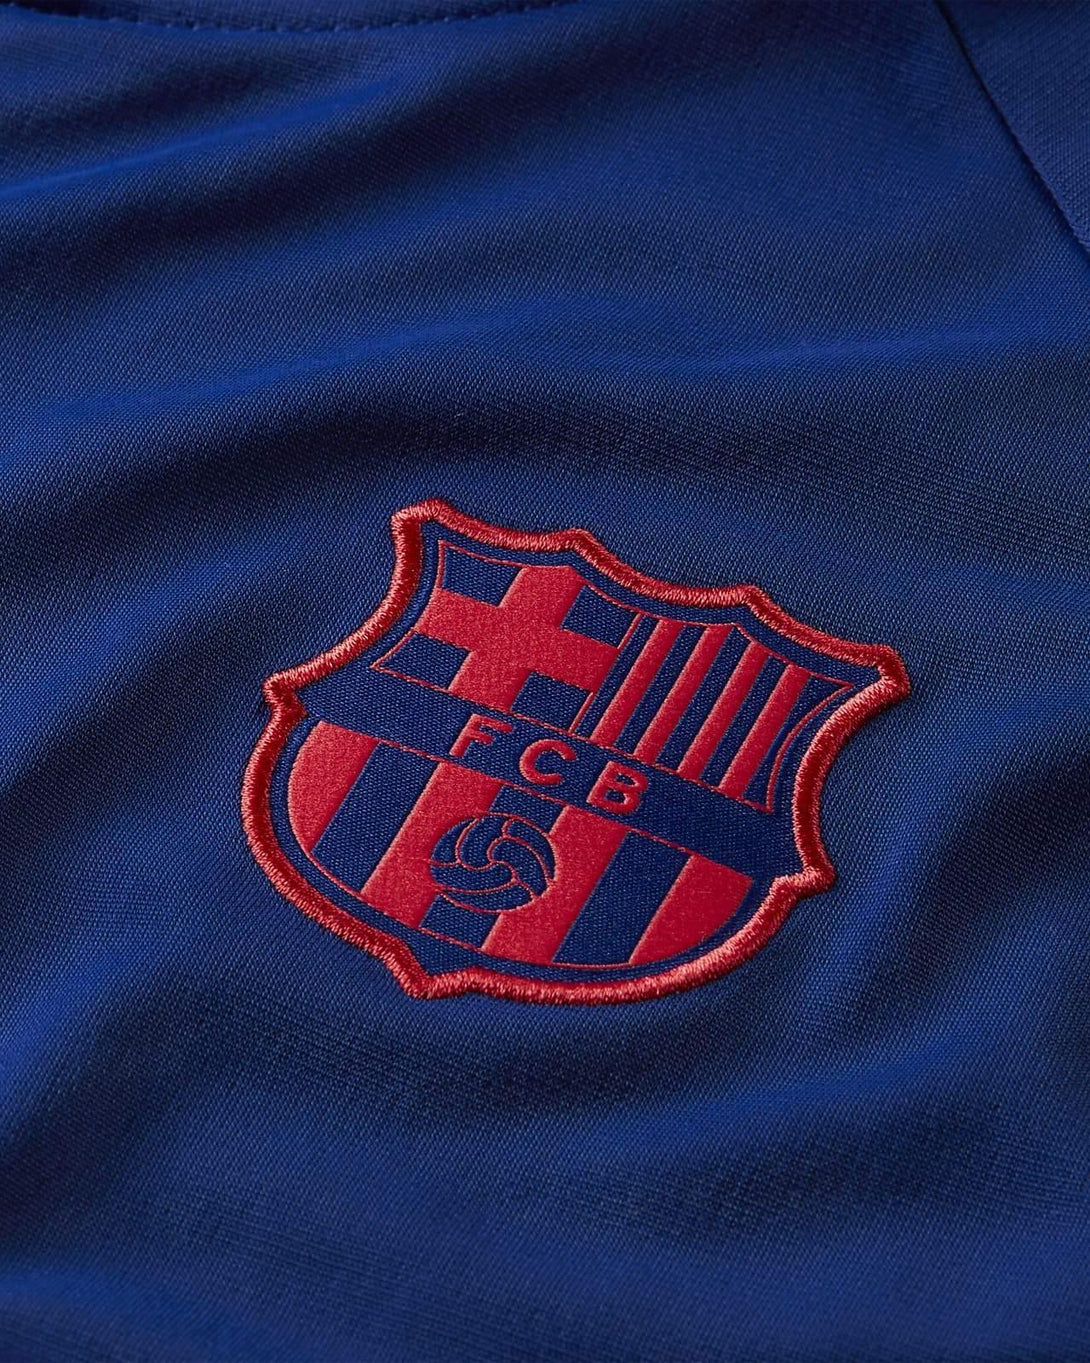 Nike FC Barcelona JDI tréning dzseki - Sportmania.hu